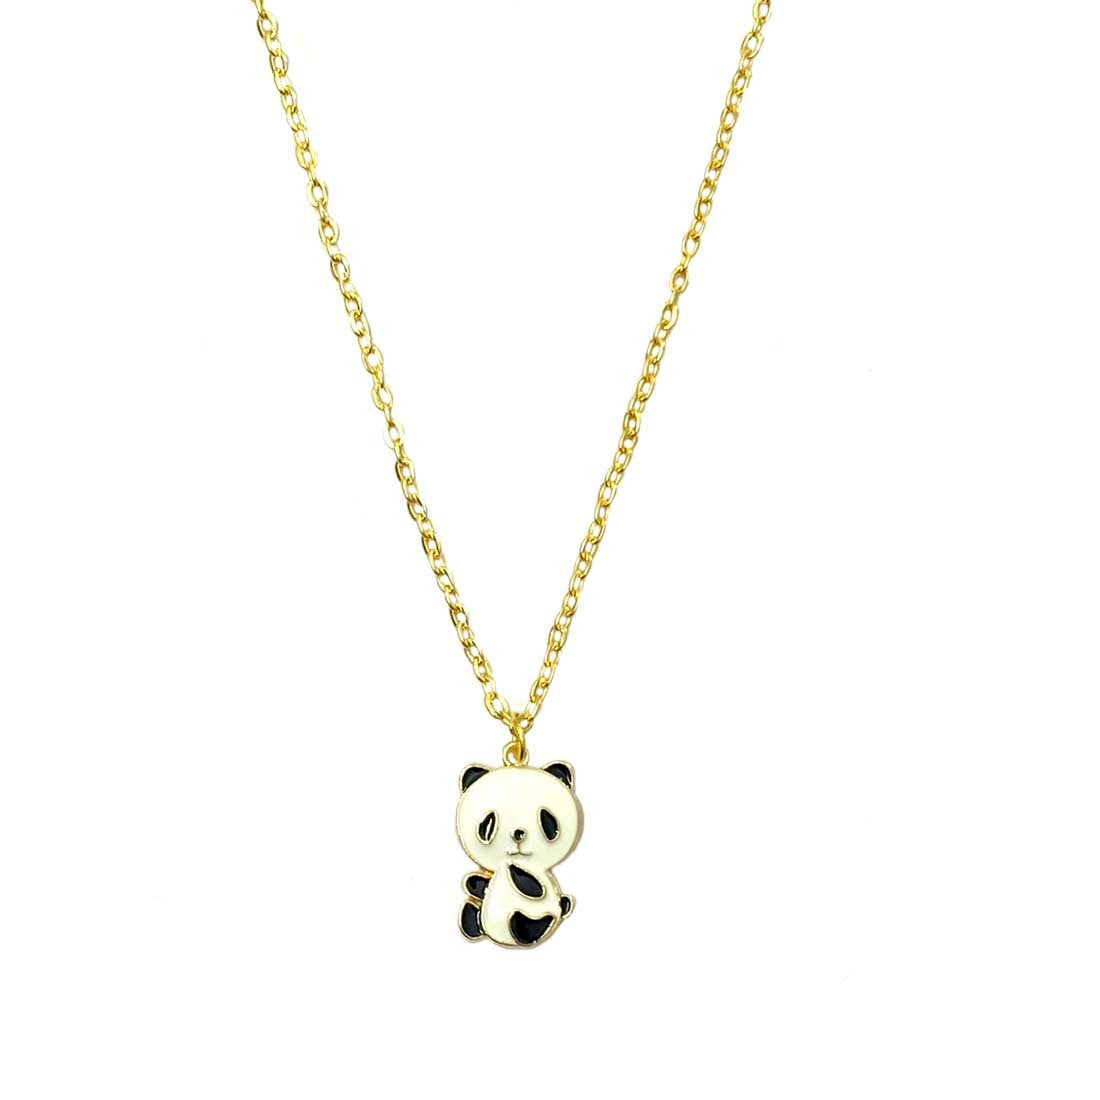 Black & White Panda Golden Charm Necklace